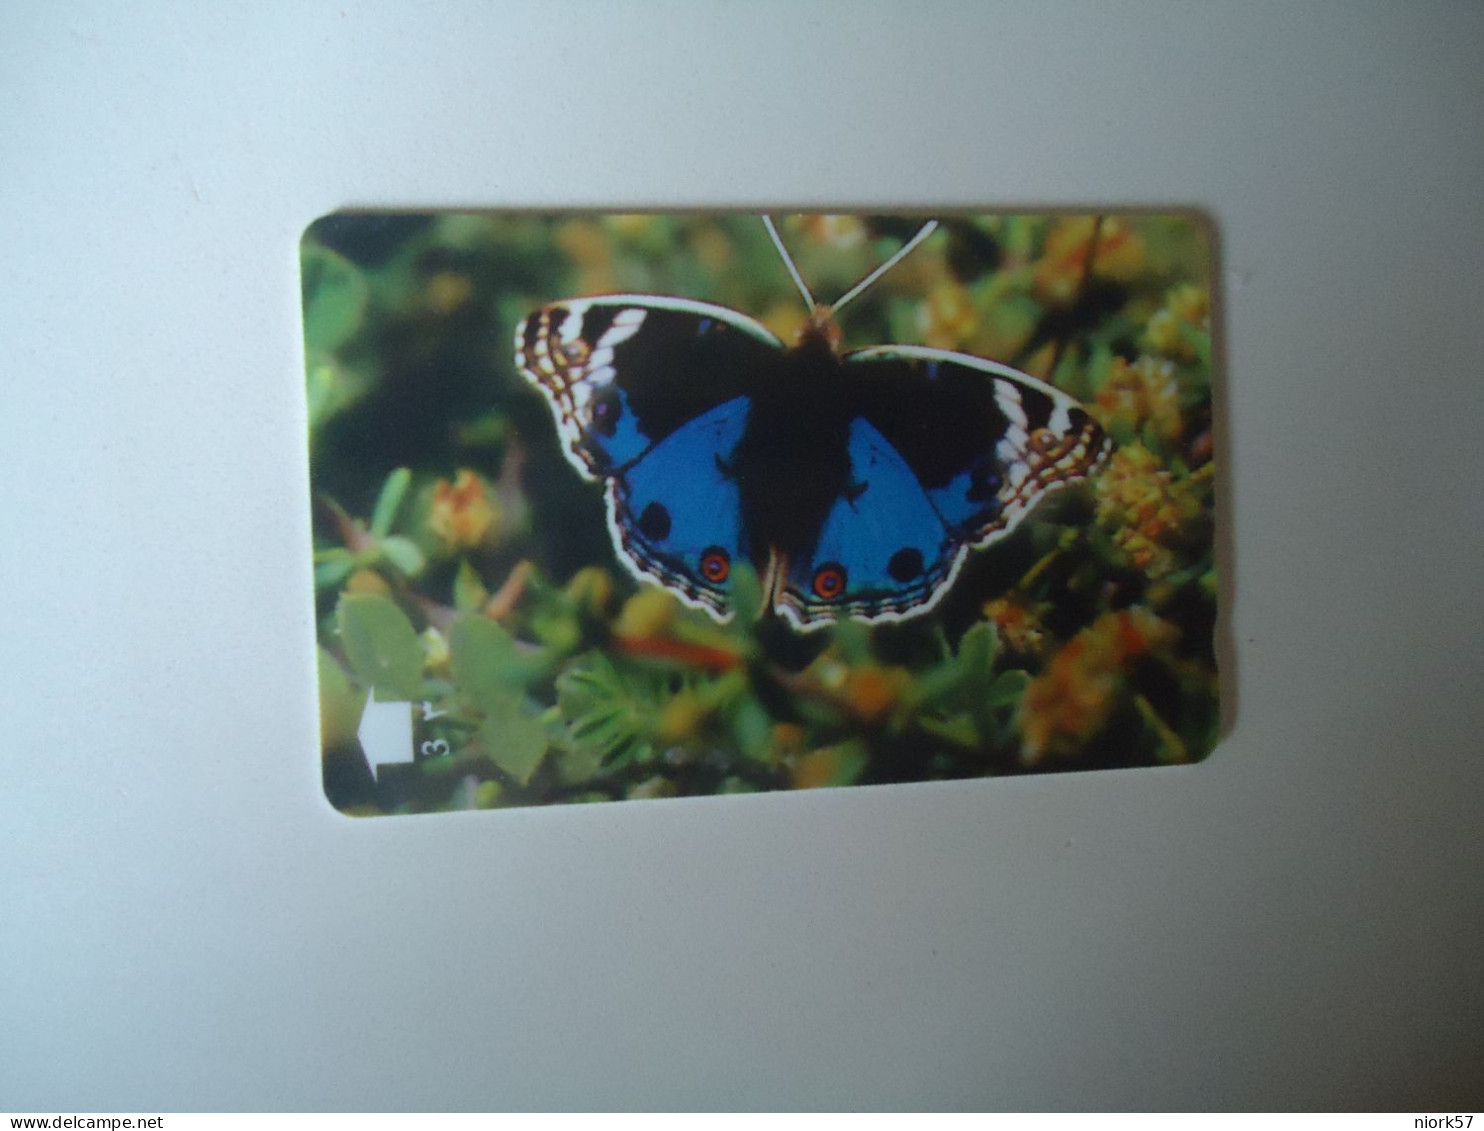 OMAN  USED   PHONECARDS  BUTTERFLIES - Schmetterlinge